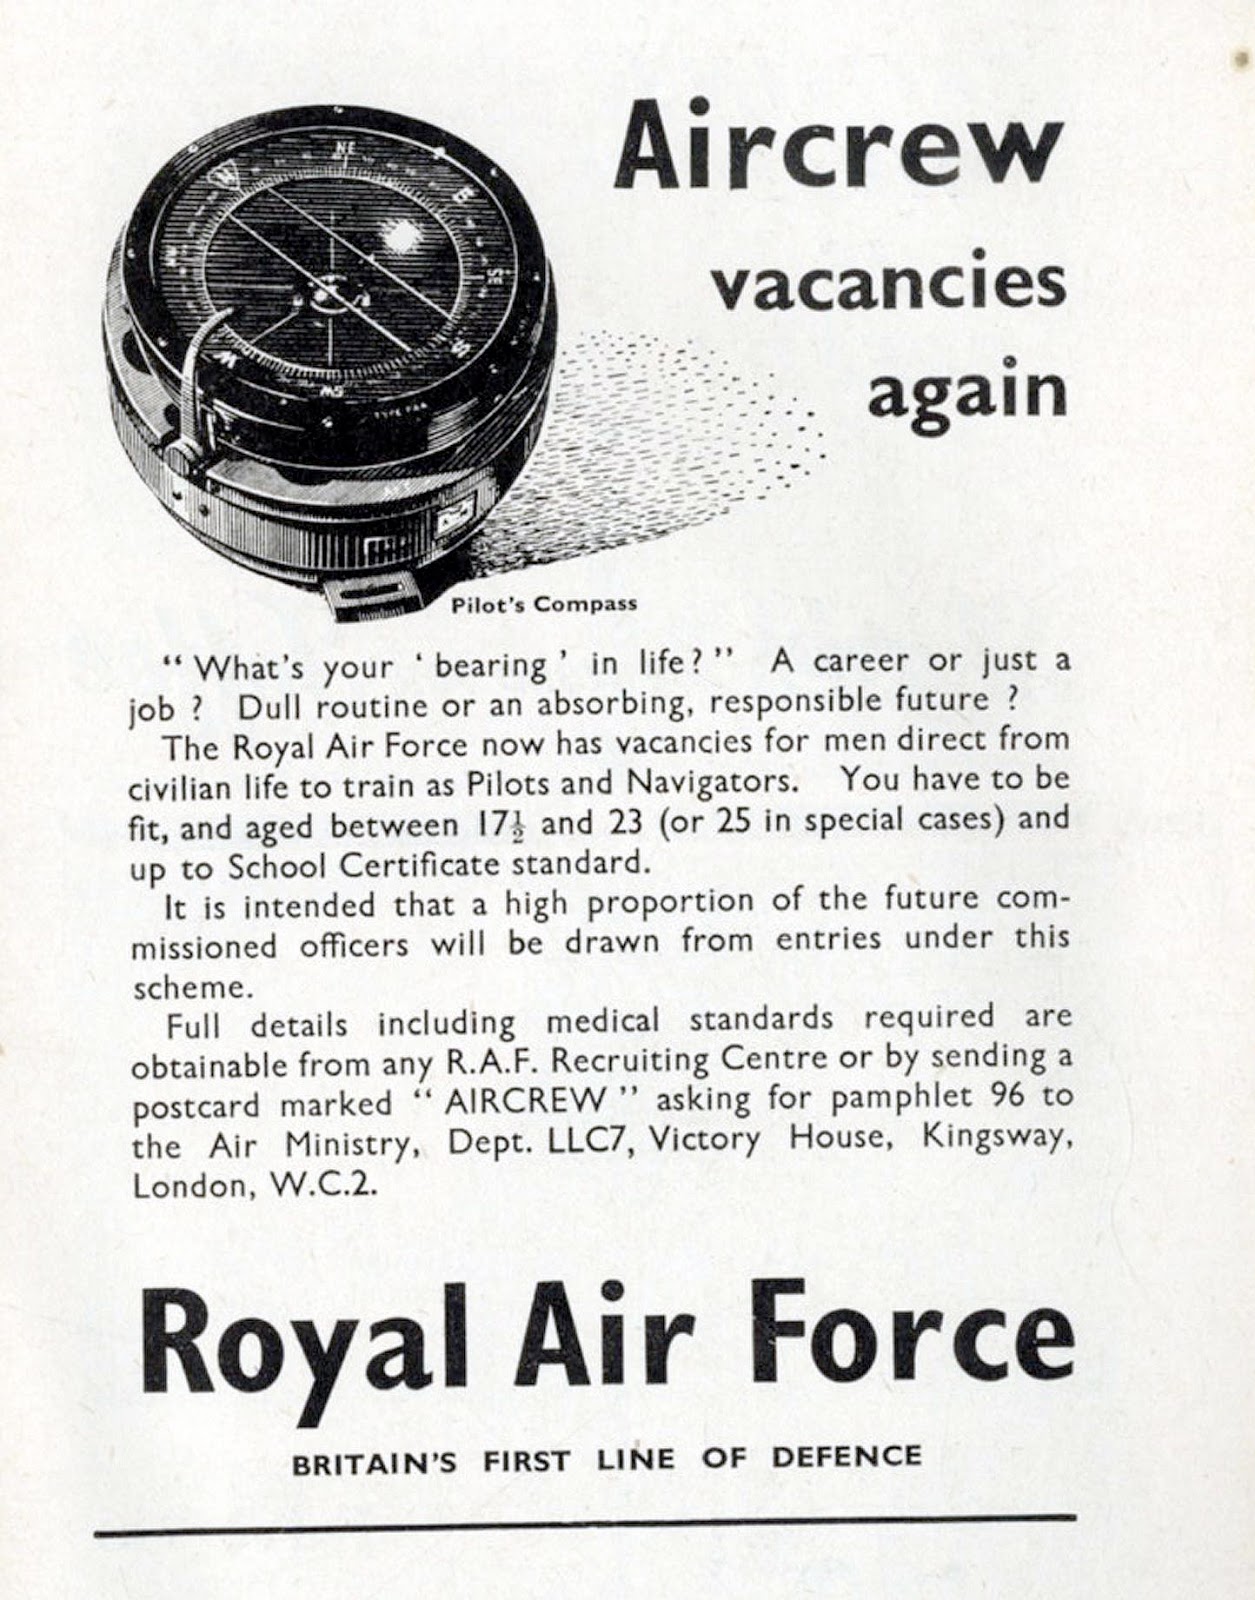 the-visual-primer-of-advertising-cliches-royal-air-force-aircrew-vacancies-again-1948